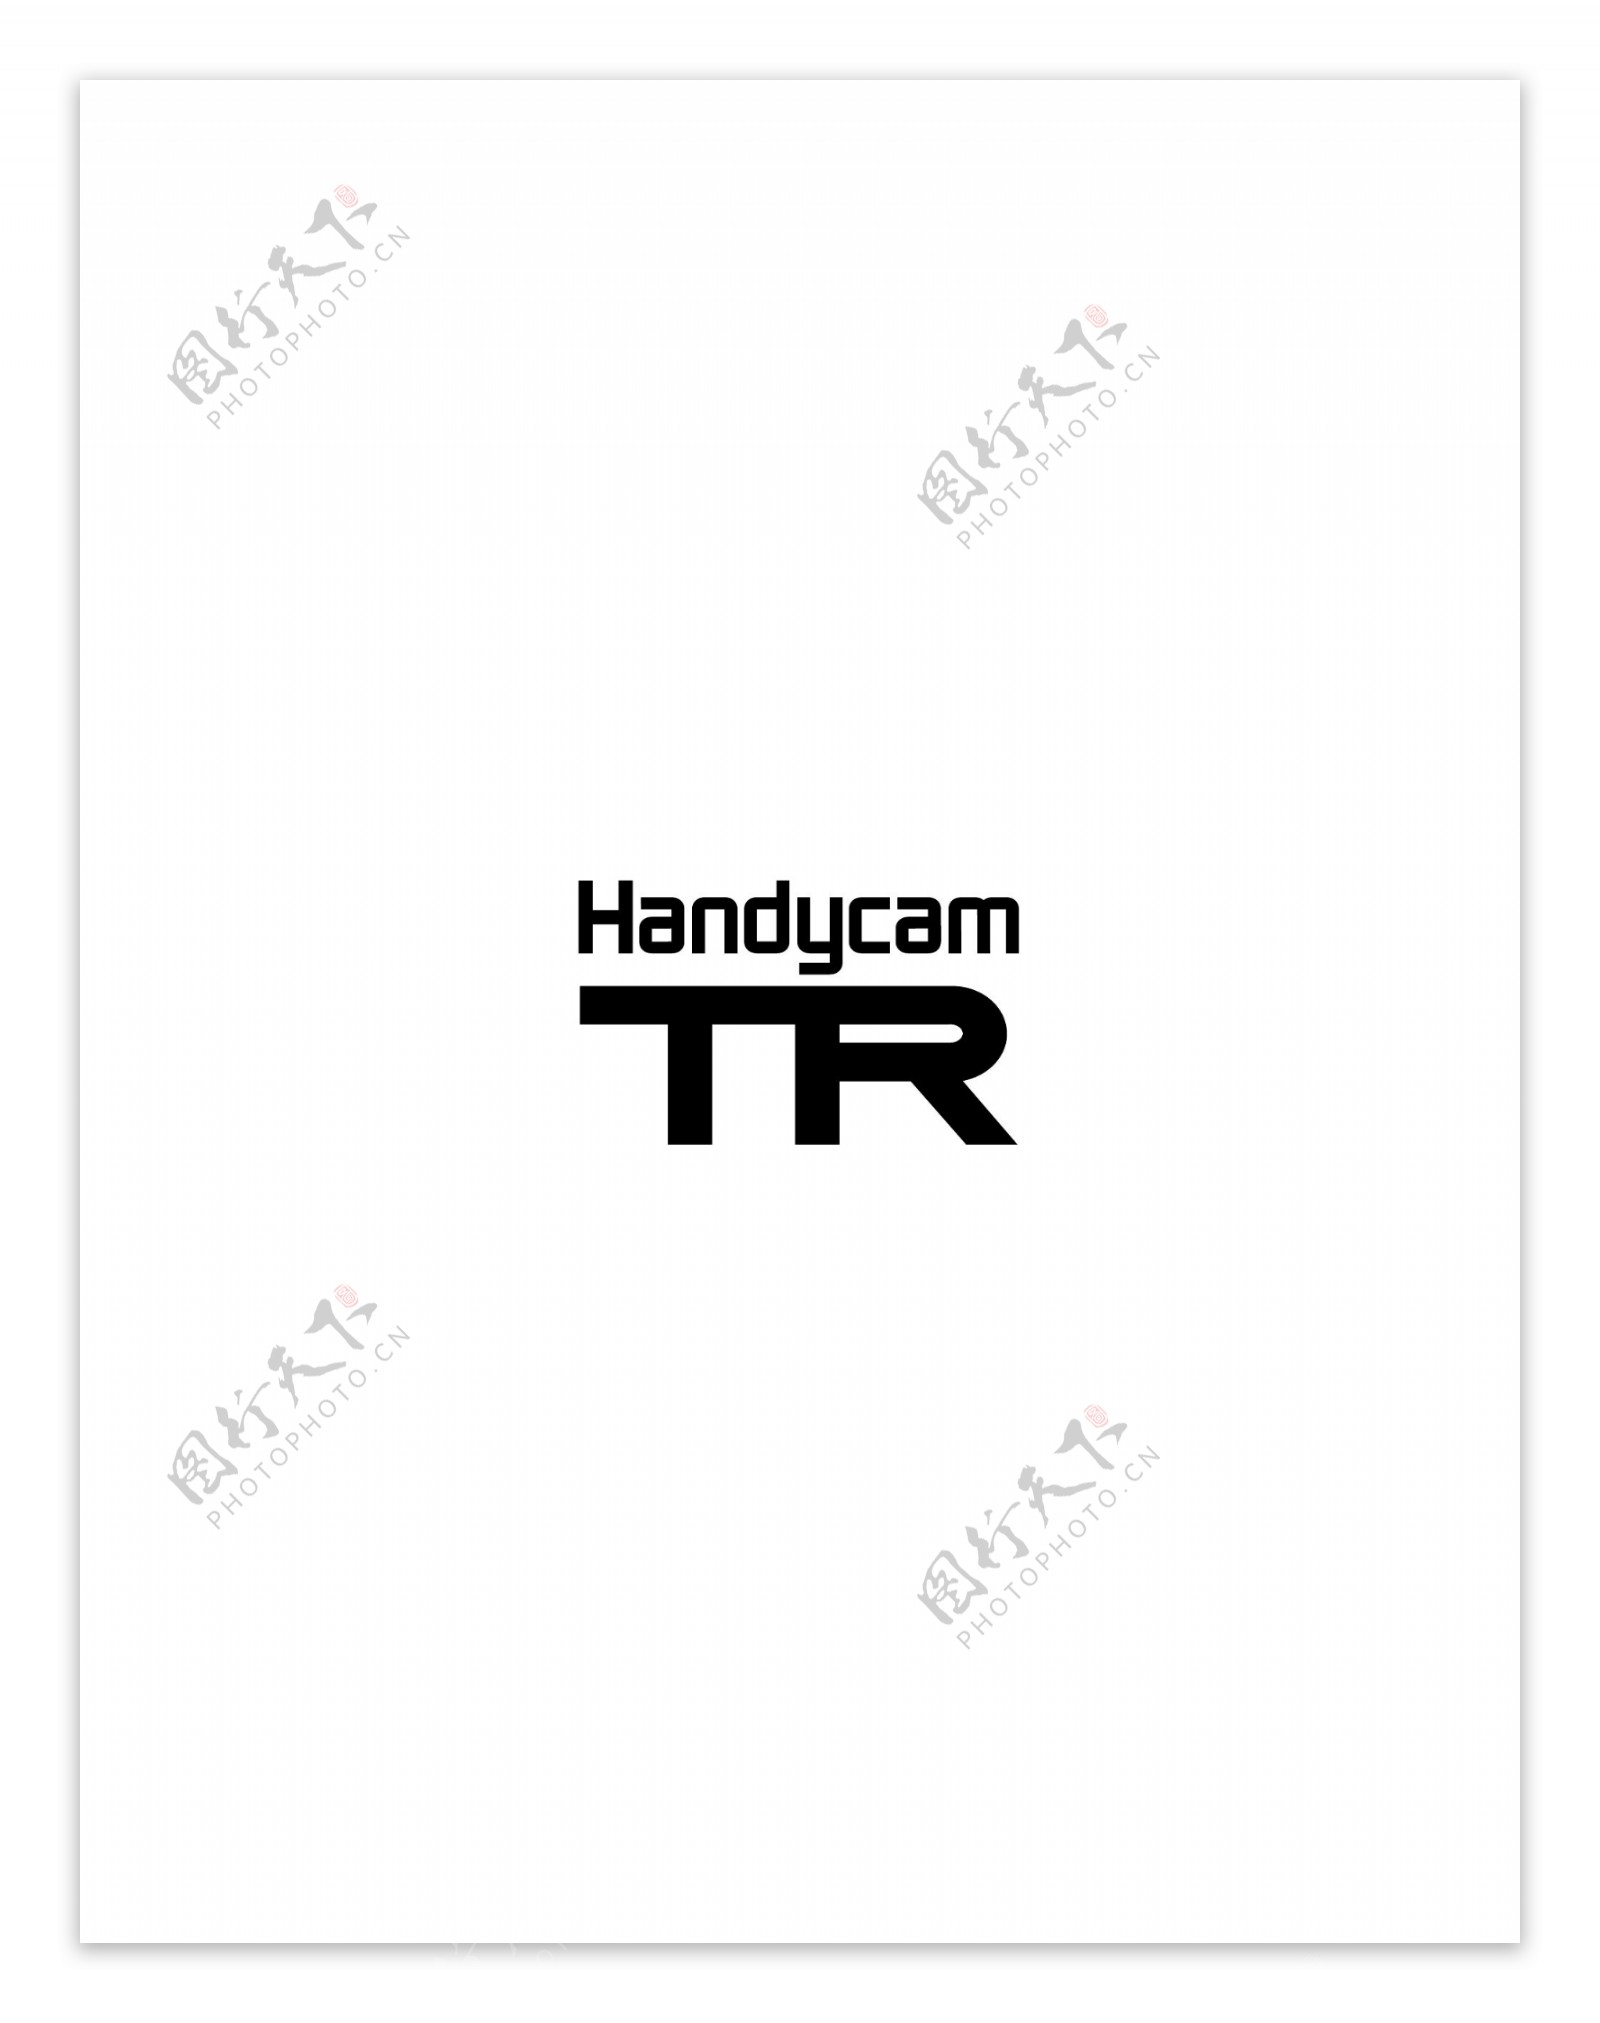 HandycamTRlogo设计欣赏电脑相关行业LOGO标志HandycamTR下载标志设计欣赏